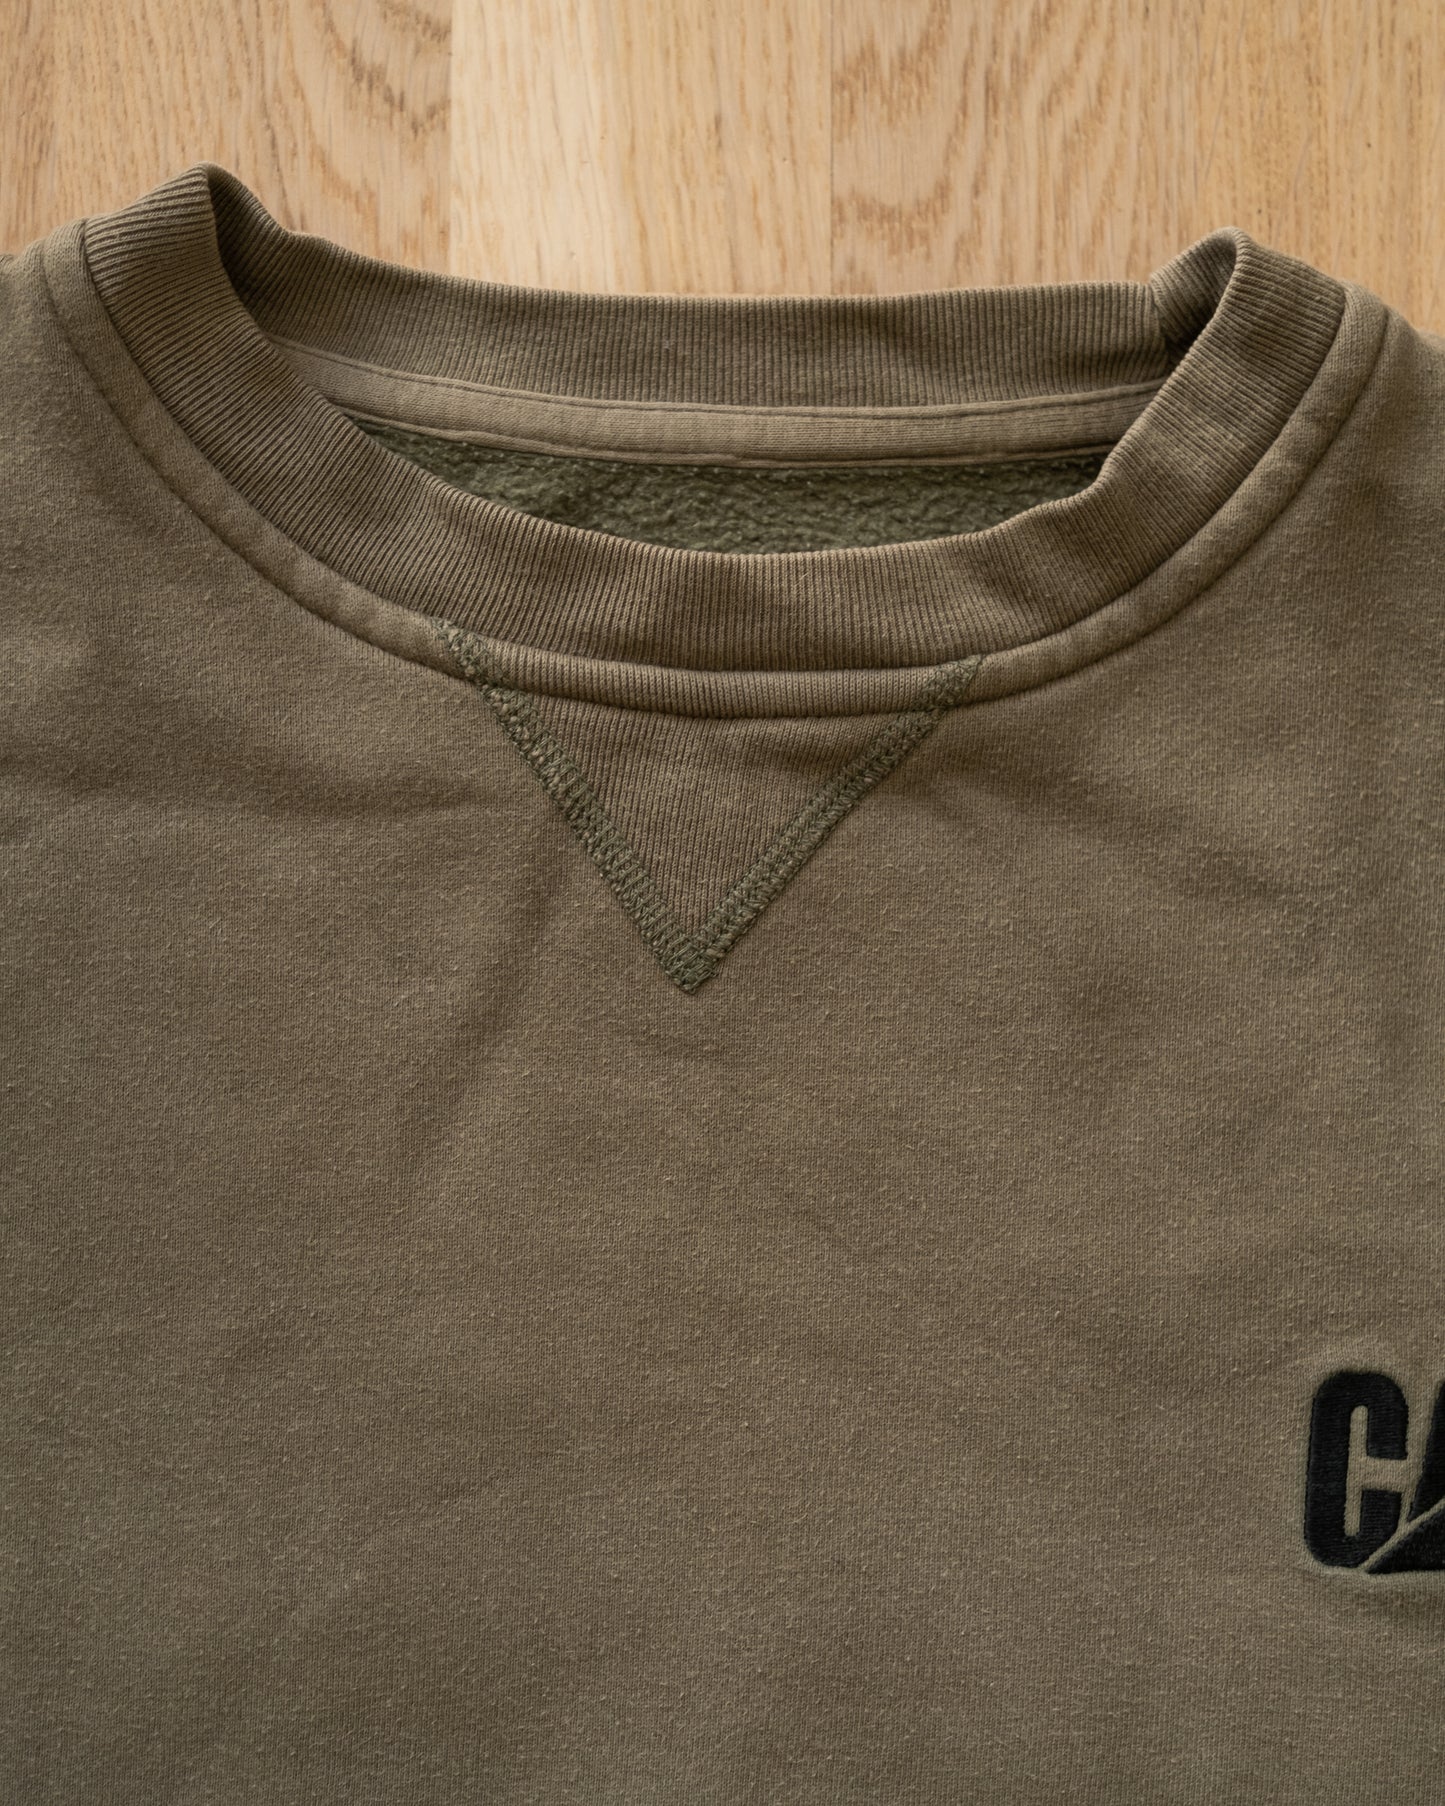 CAT Vintage Crewneck Sweater Size M